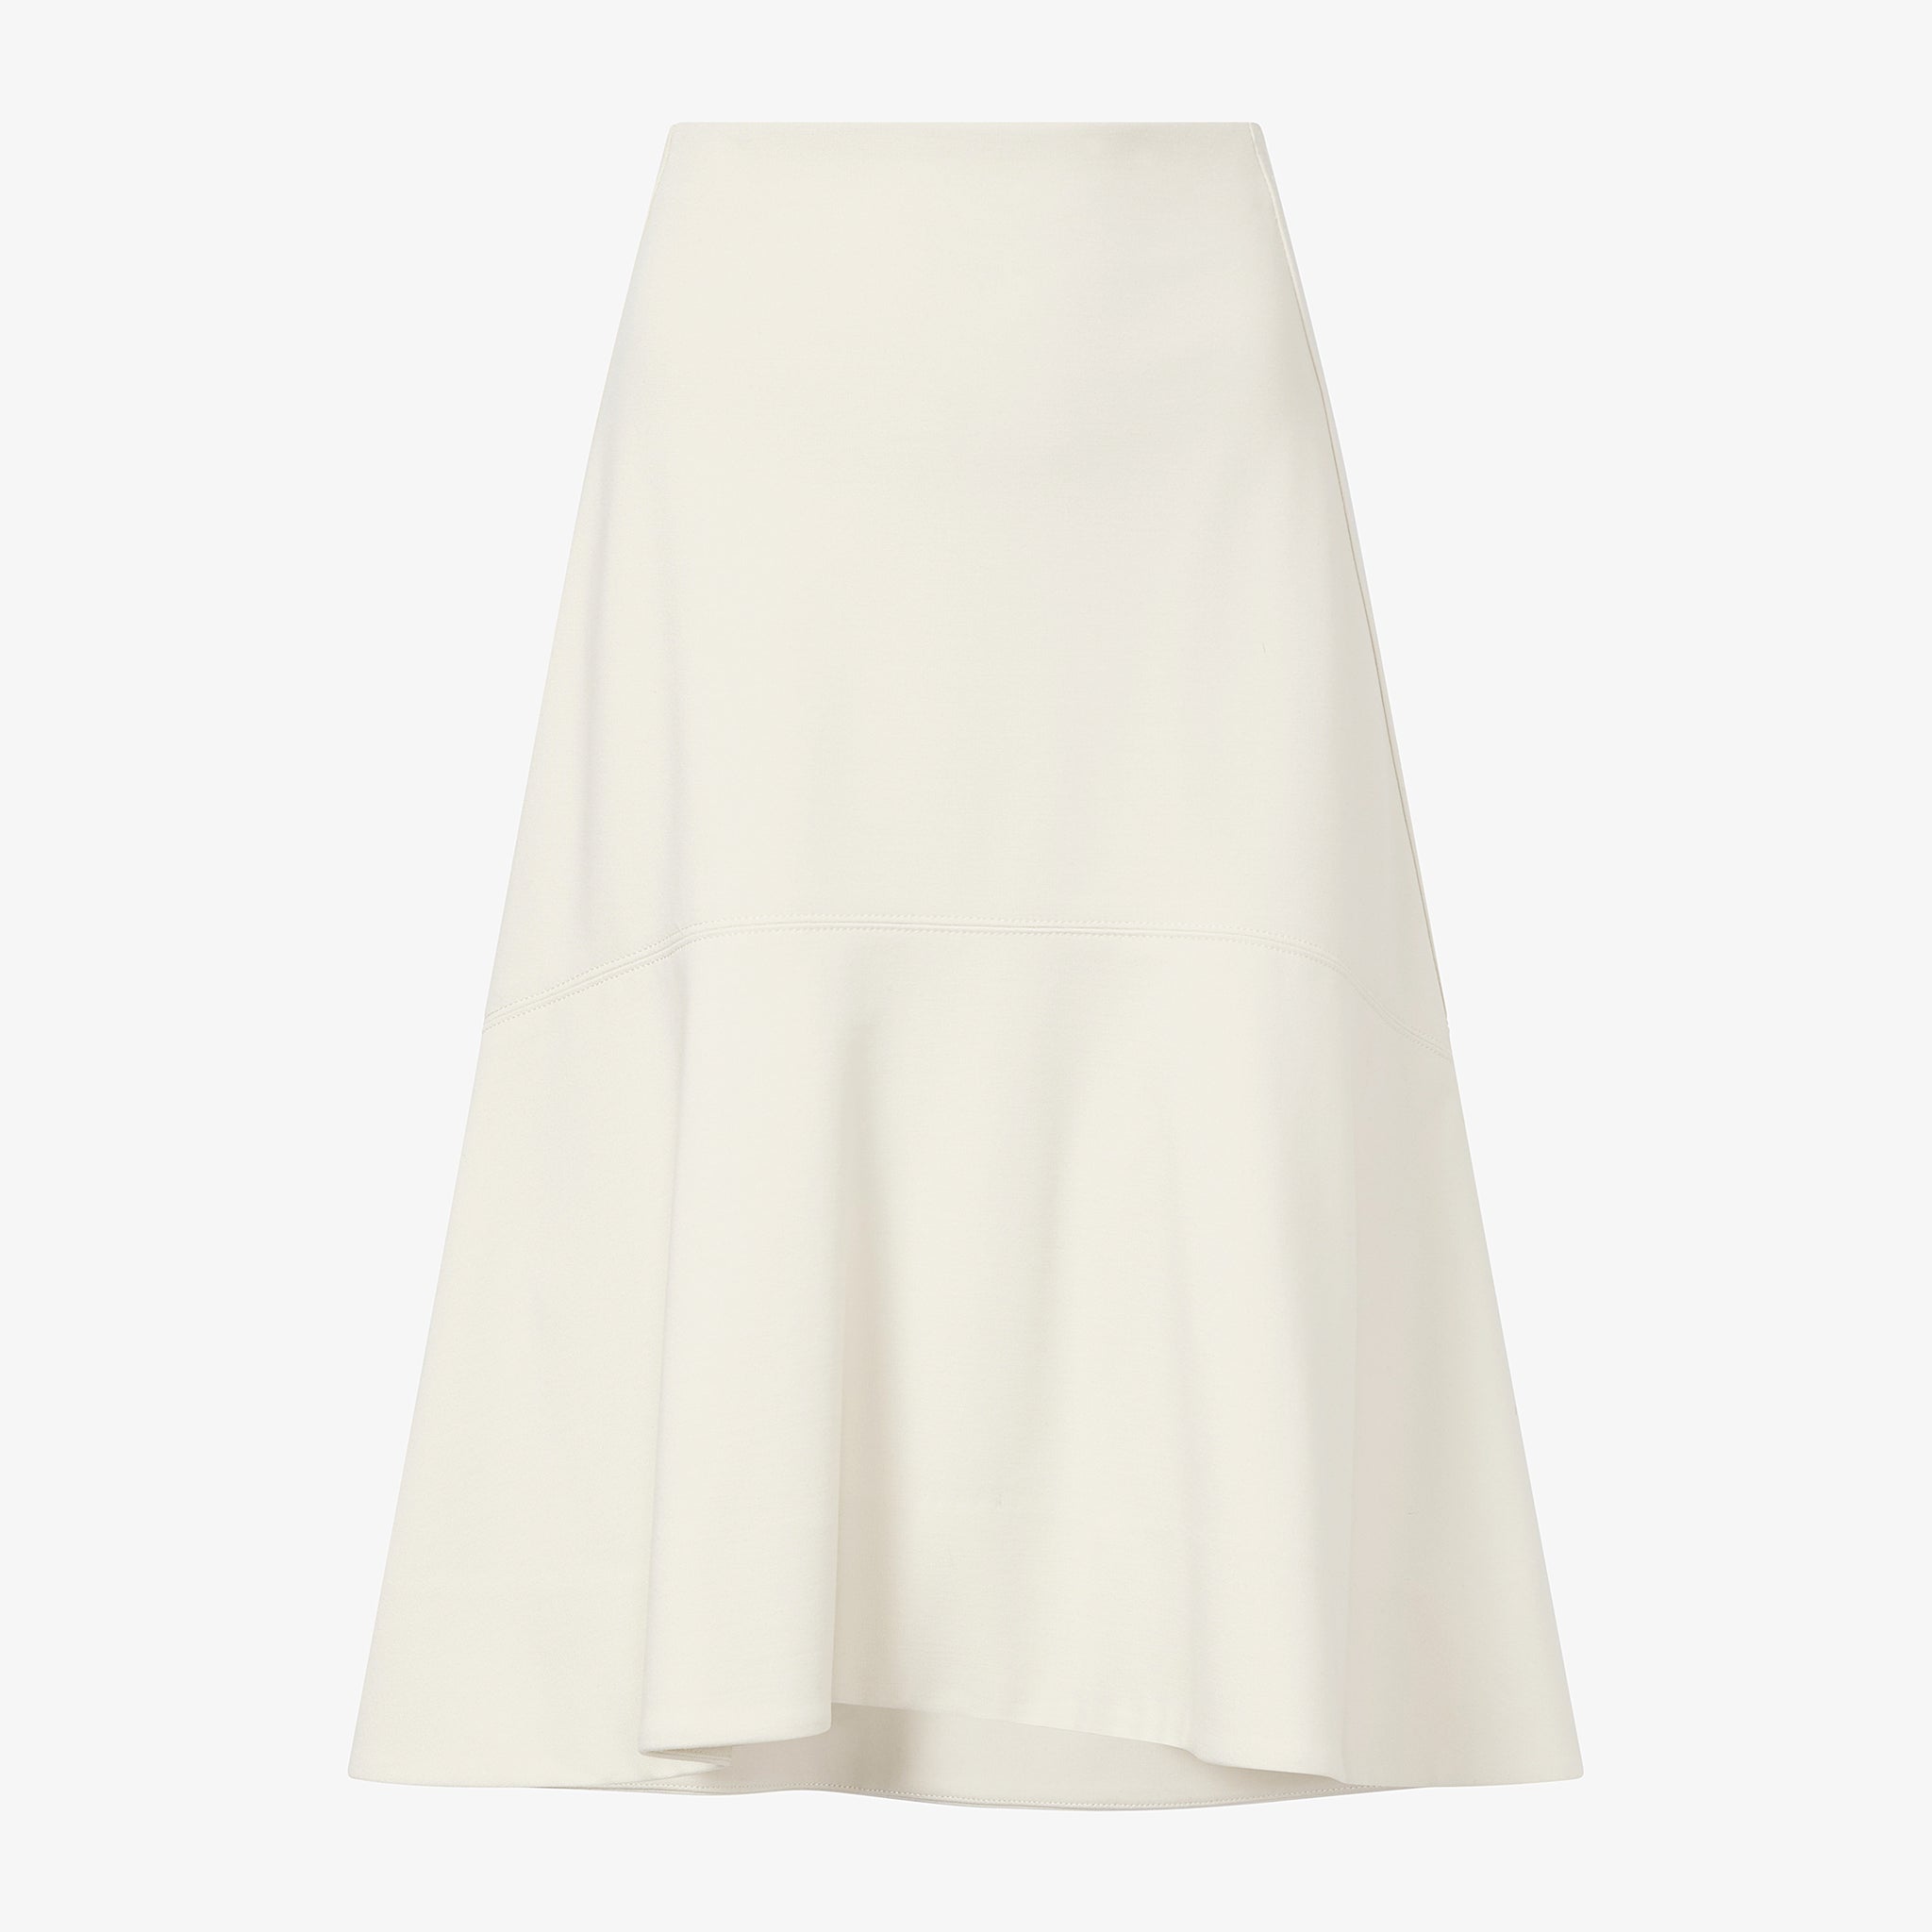 Packshot image of the Astor Skirt in Pearl